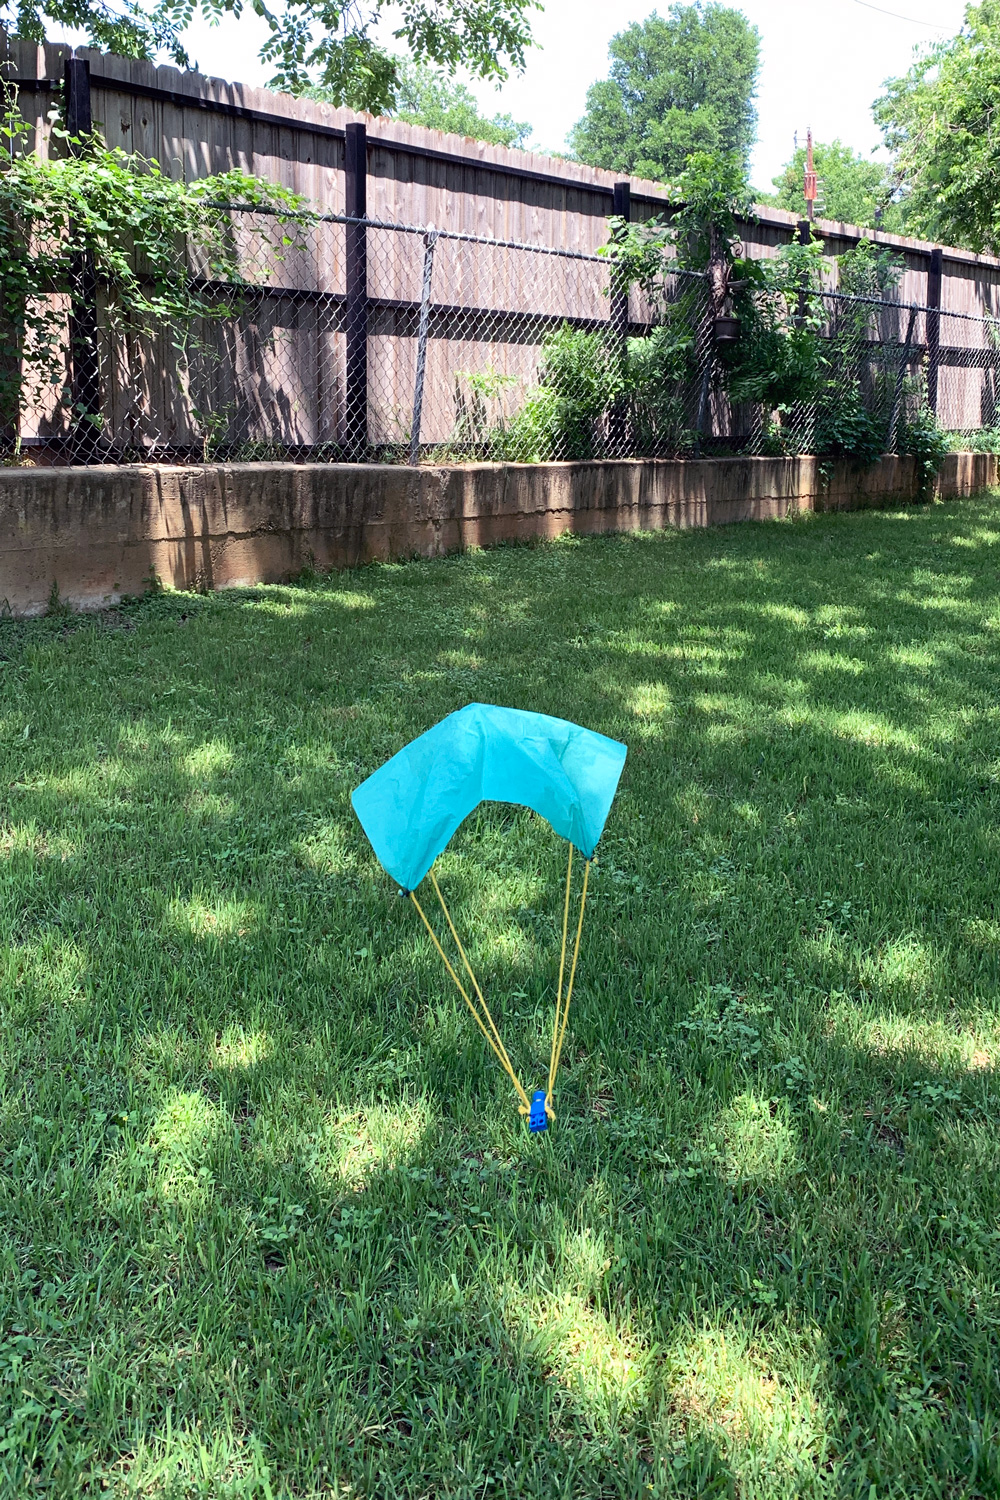 DIY parachute landing on the grass in a backyard.